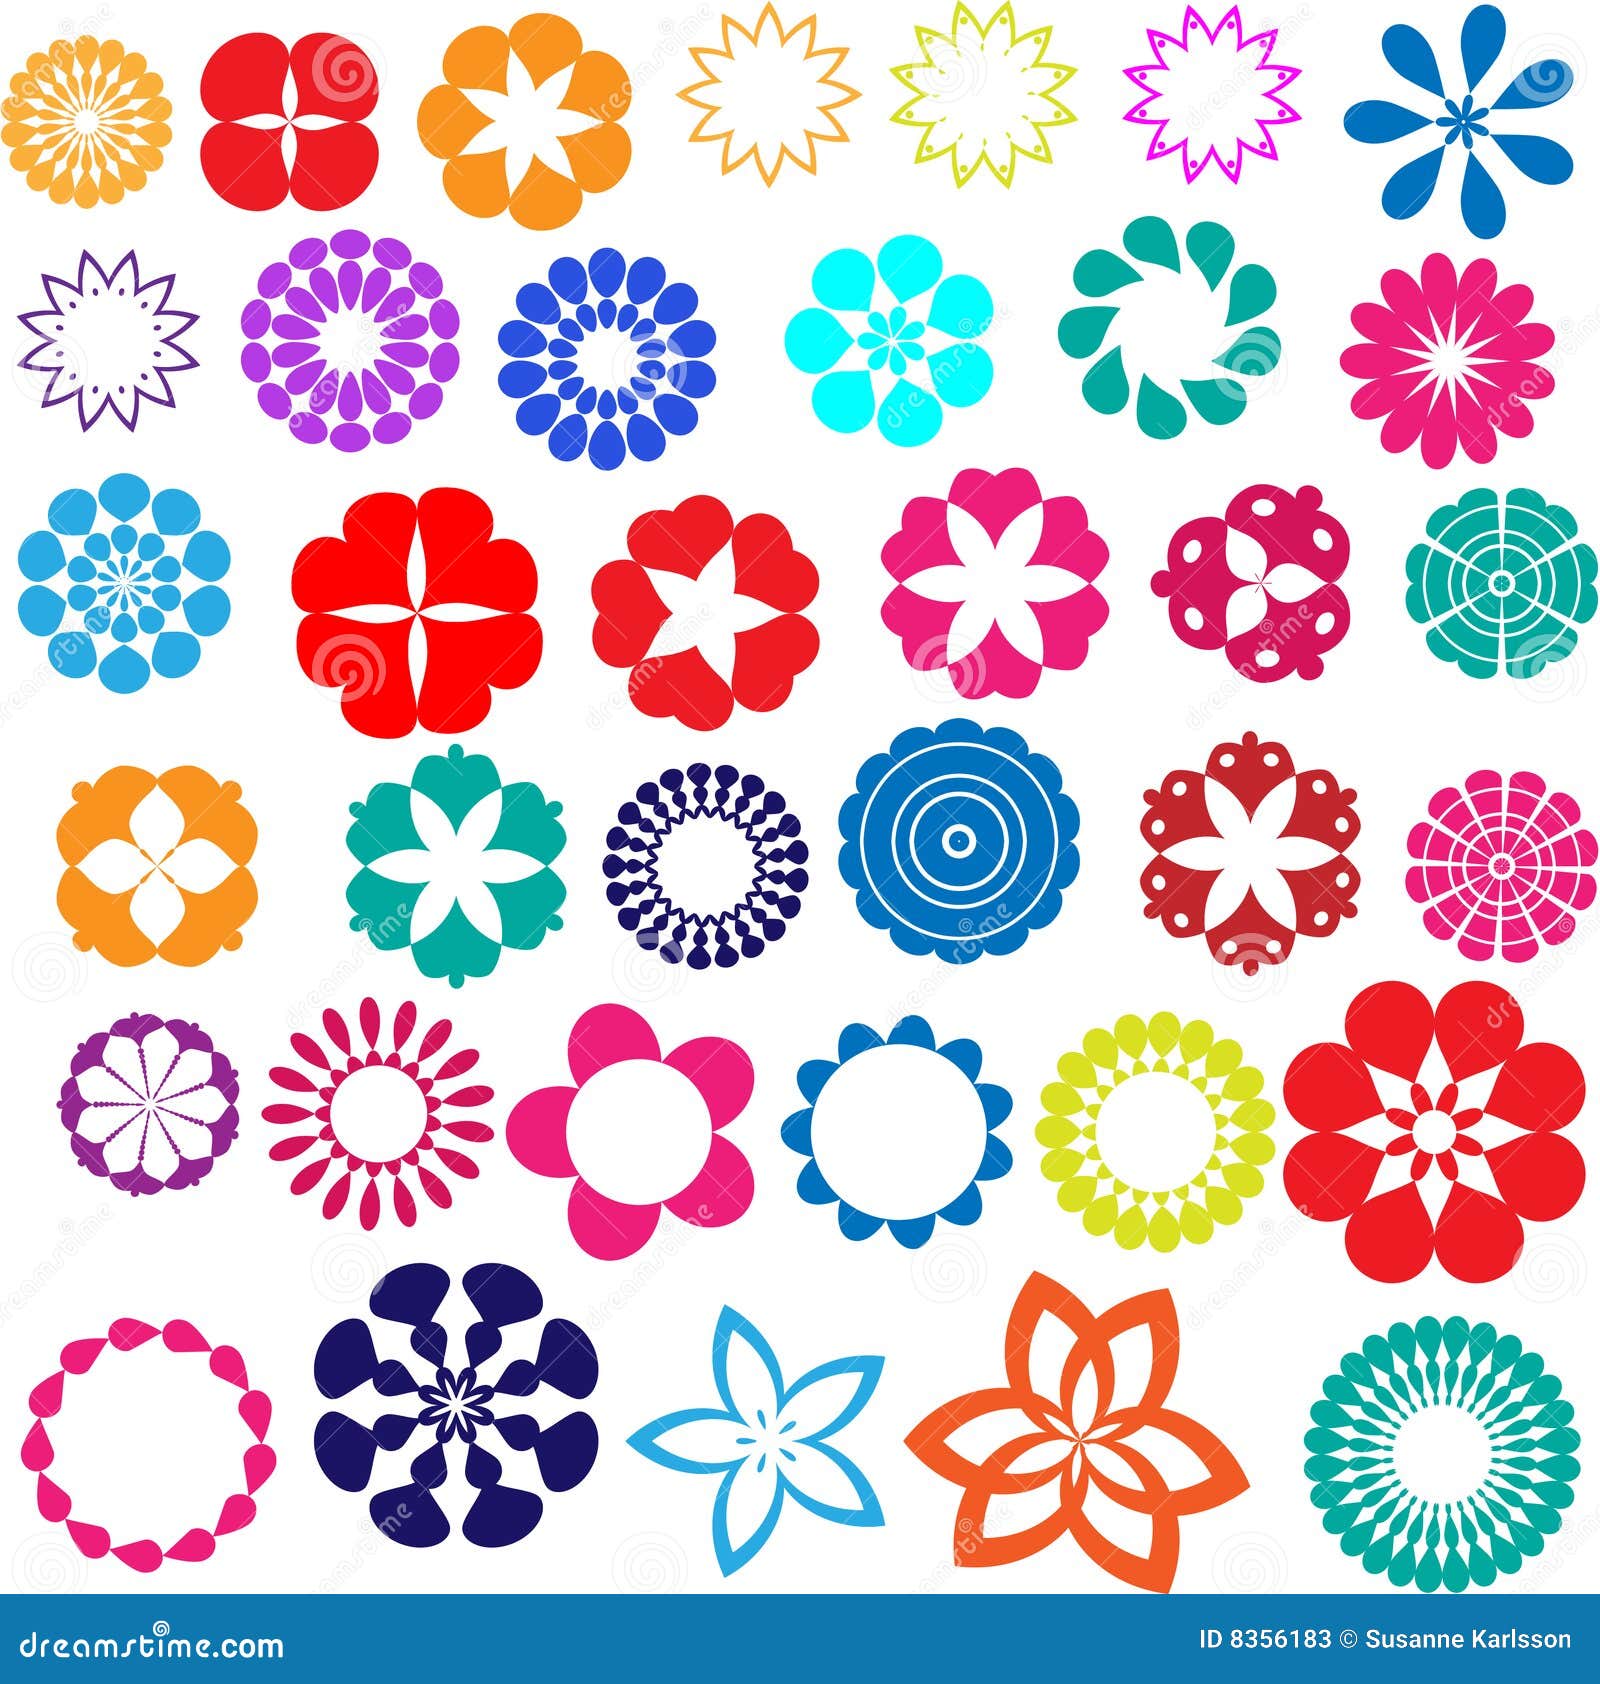 Flower designs stock vector. Illustration of beauty, backdrop - 8356183